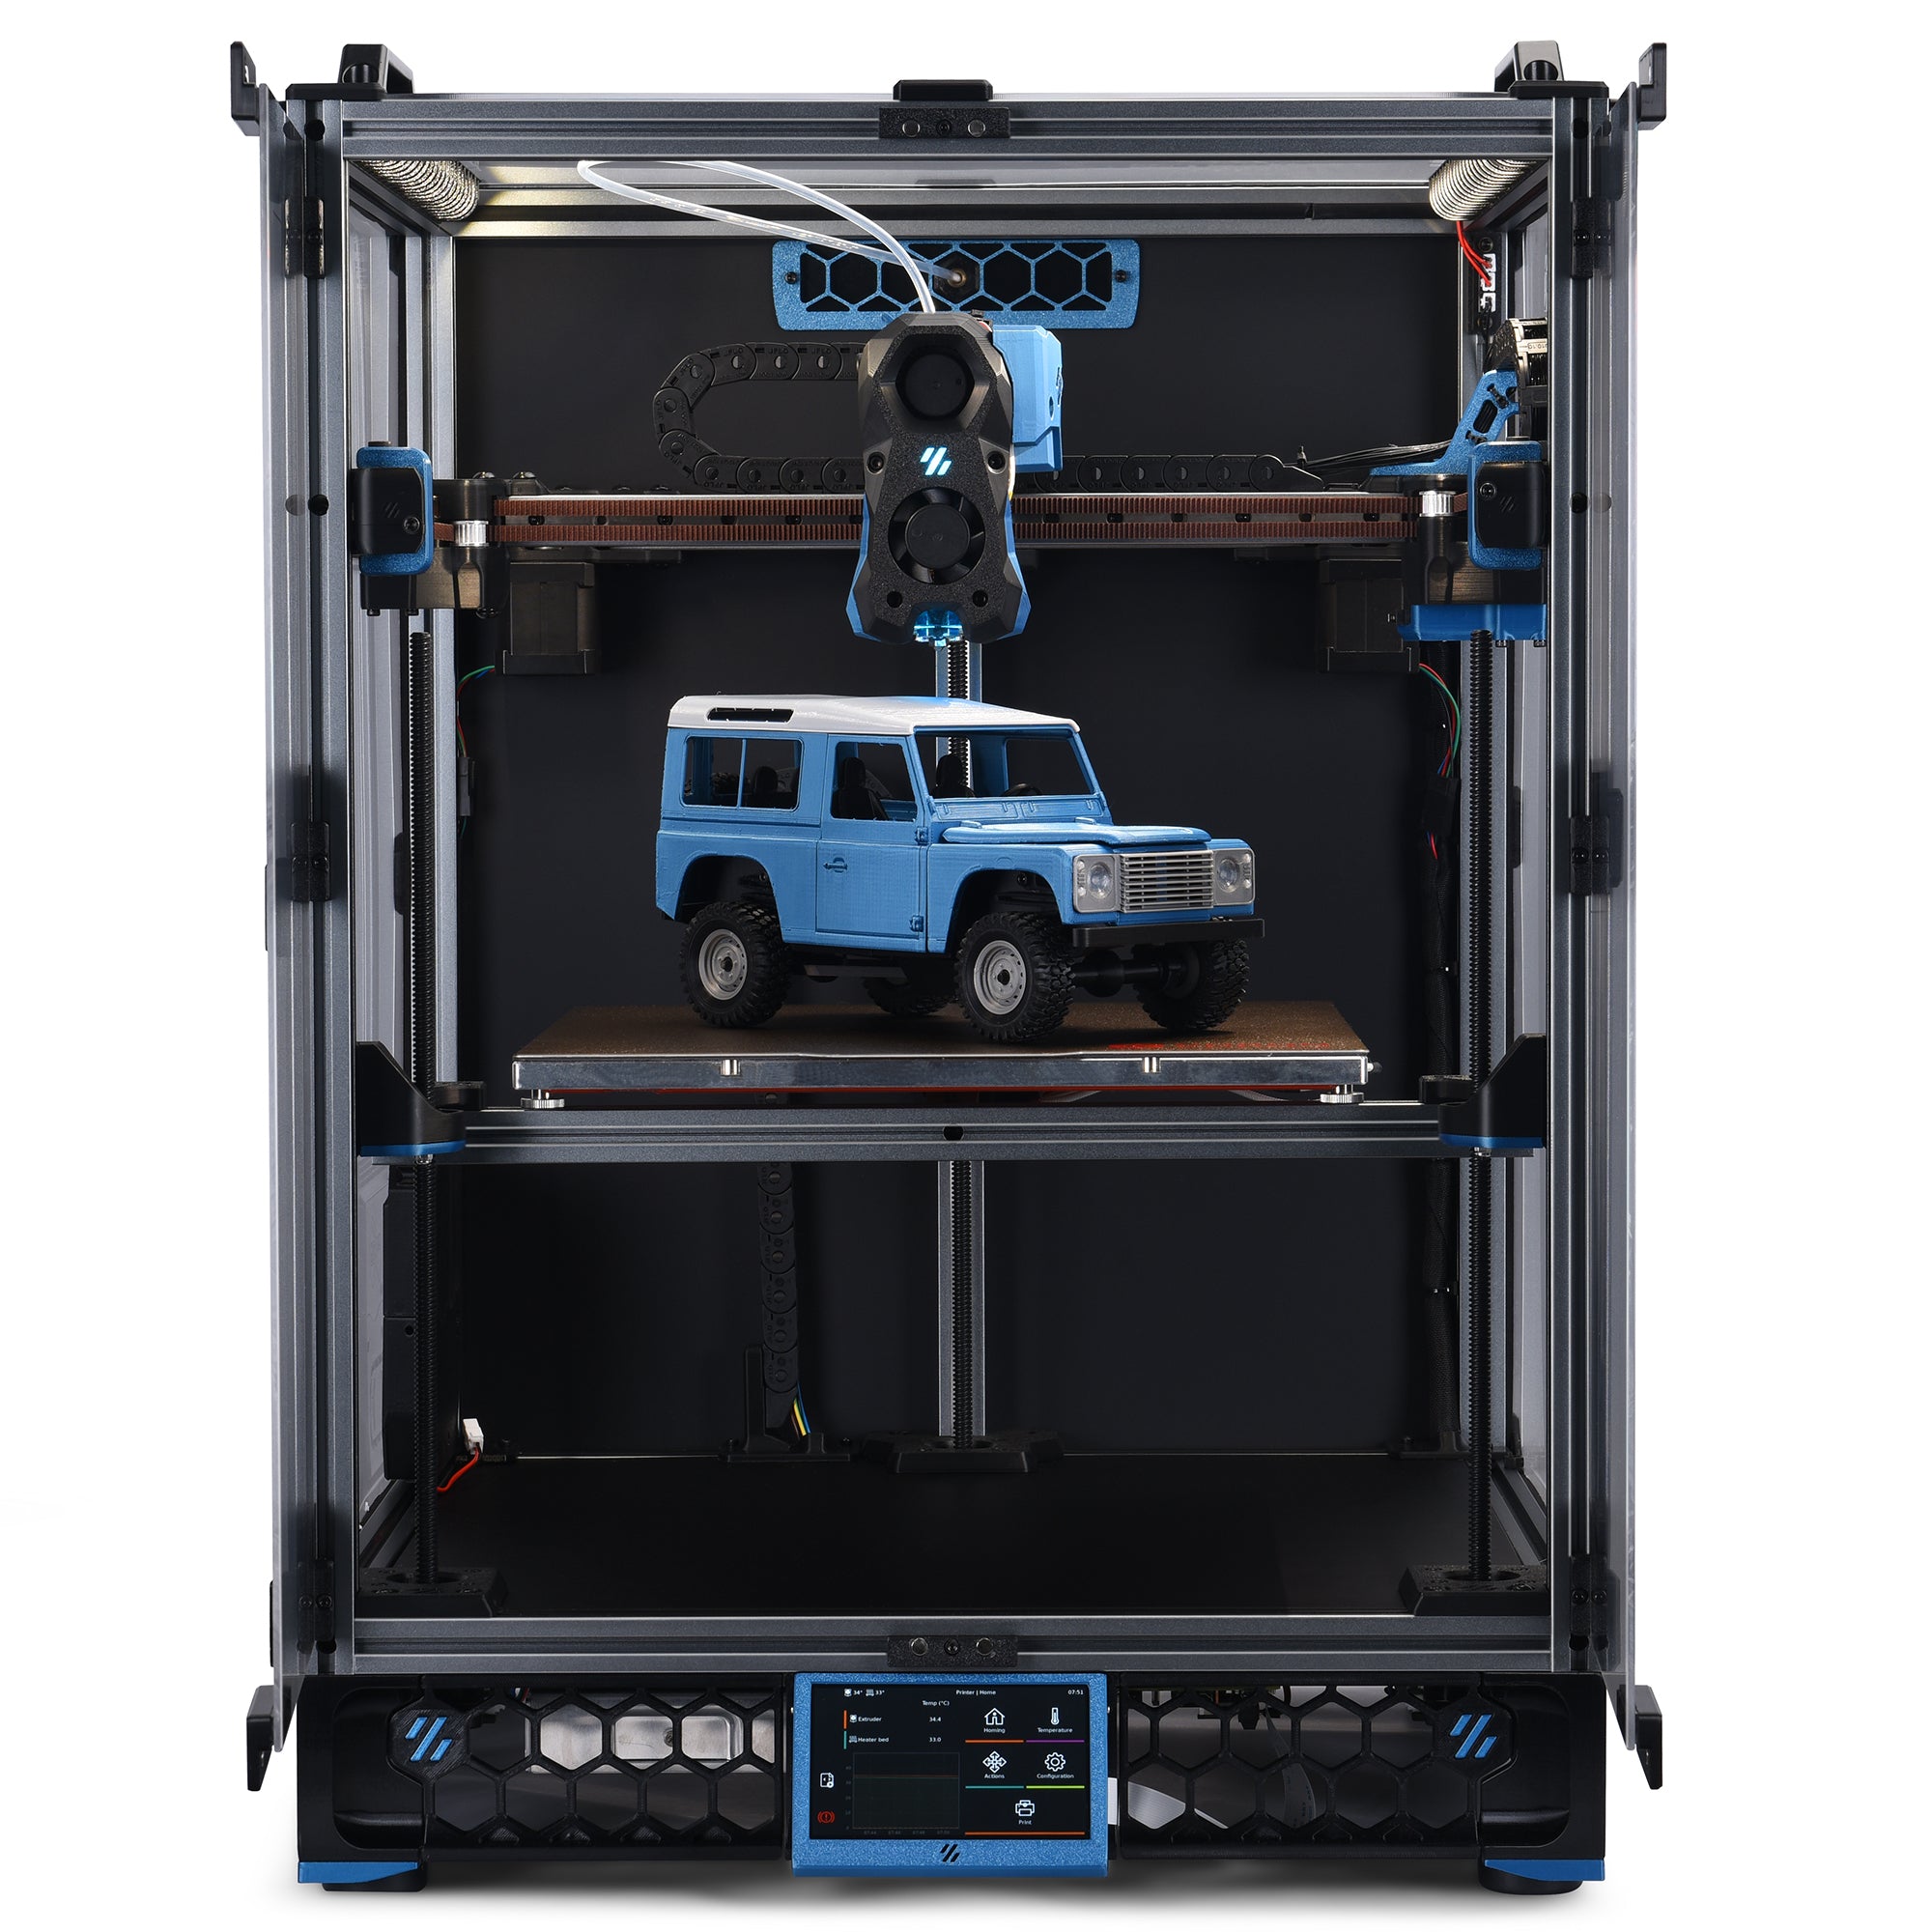 Voron Trident 250x250x300 3D Printer Kit By LDO Rev. C Batch 2307 (INC. PI 4B 1gb)